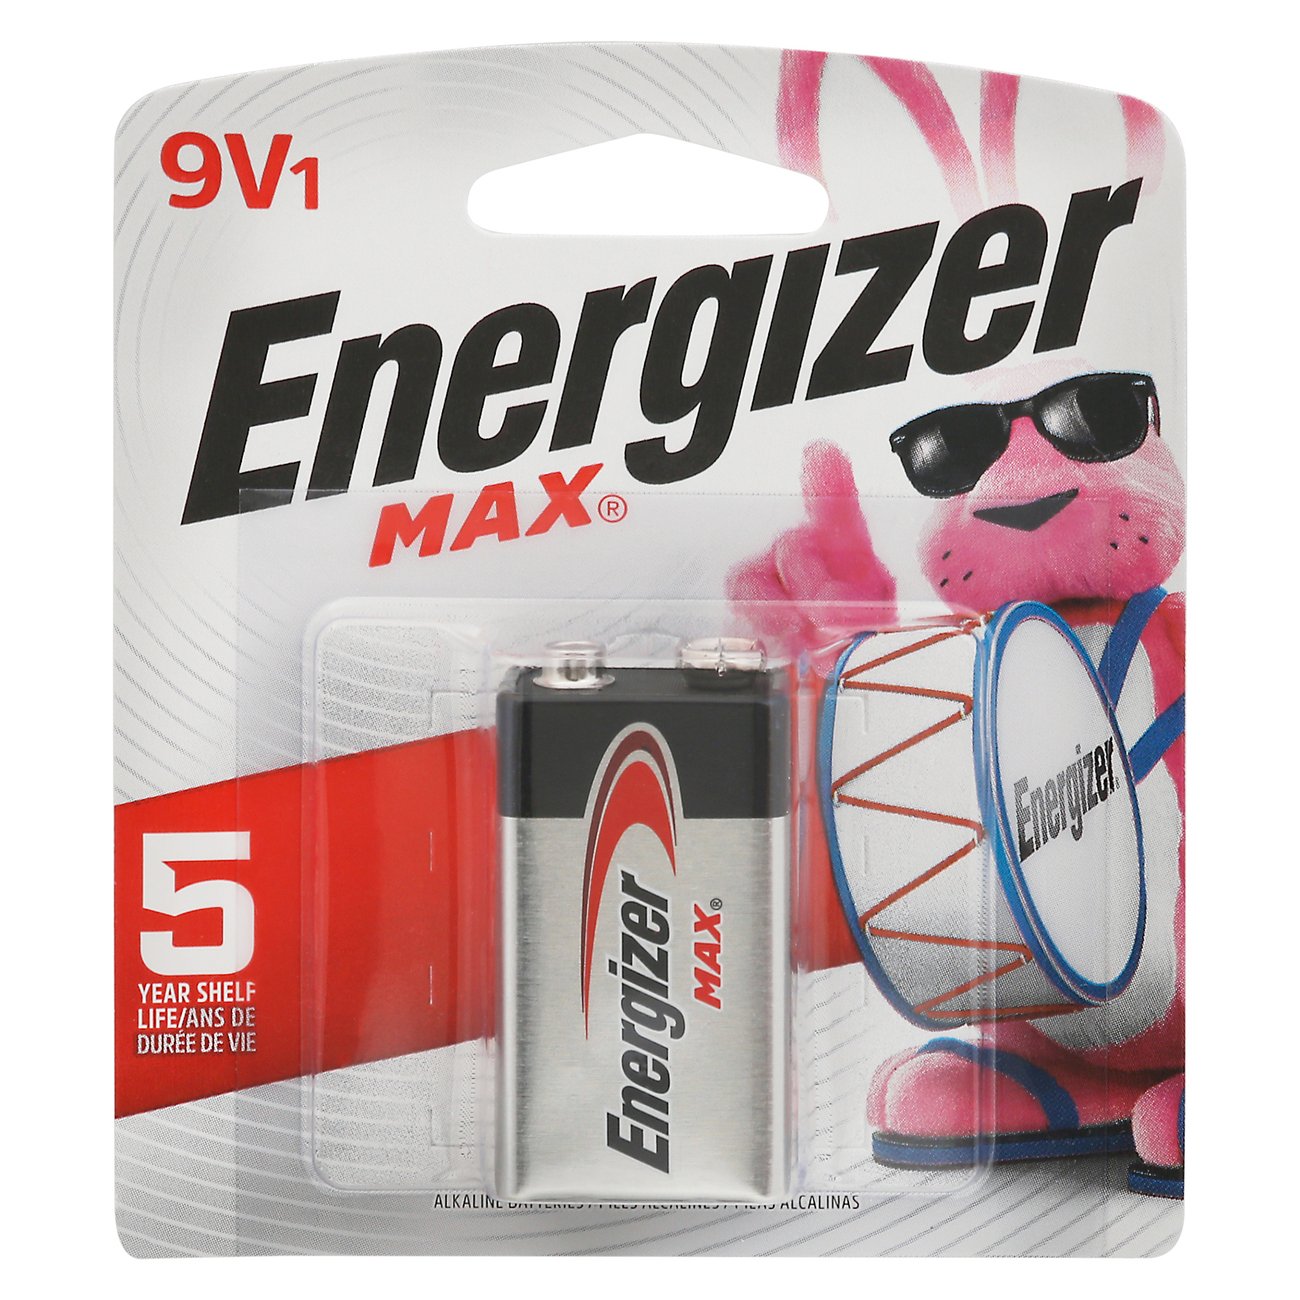 Energizer Ultimate Lithium AA Batteries - Shop Batteries at H-E-B